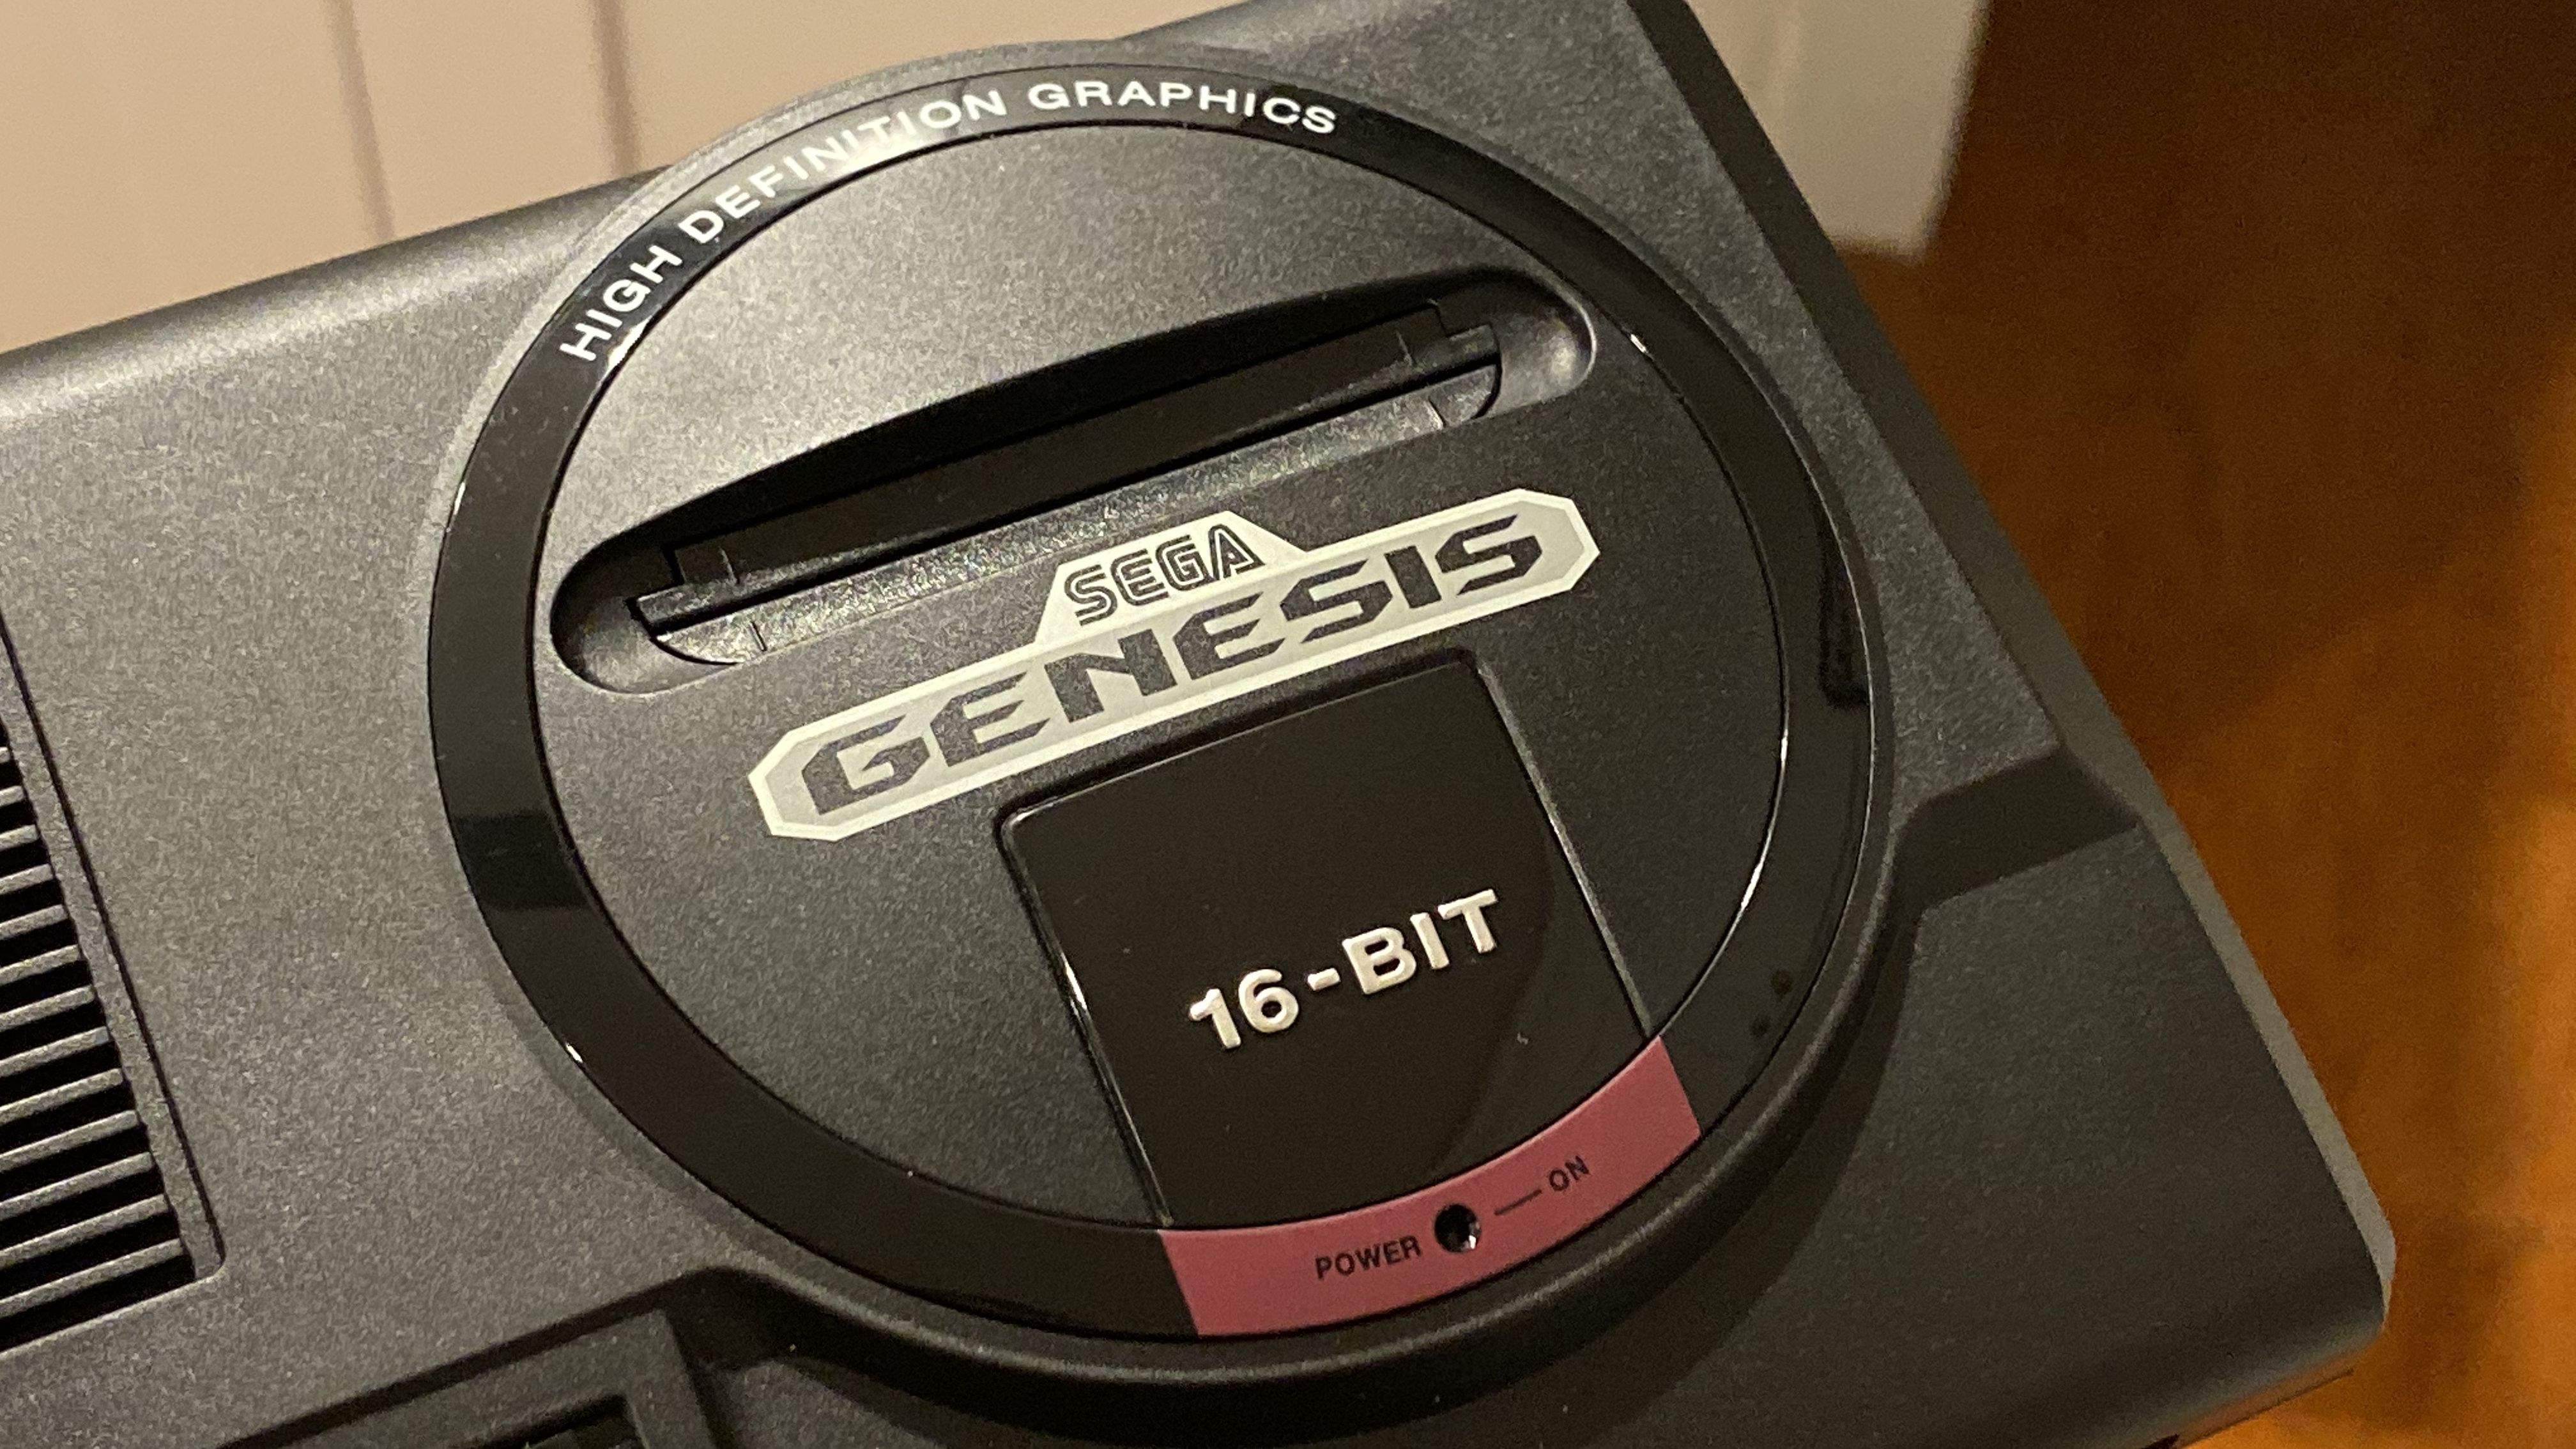 Sega Genesis Mini - Wikipedia